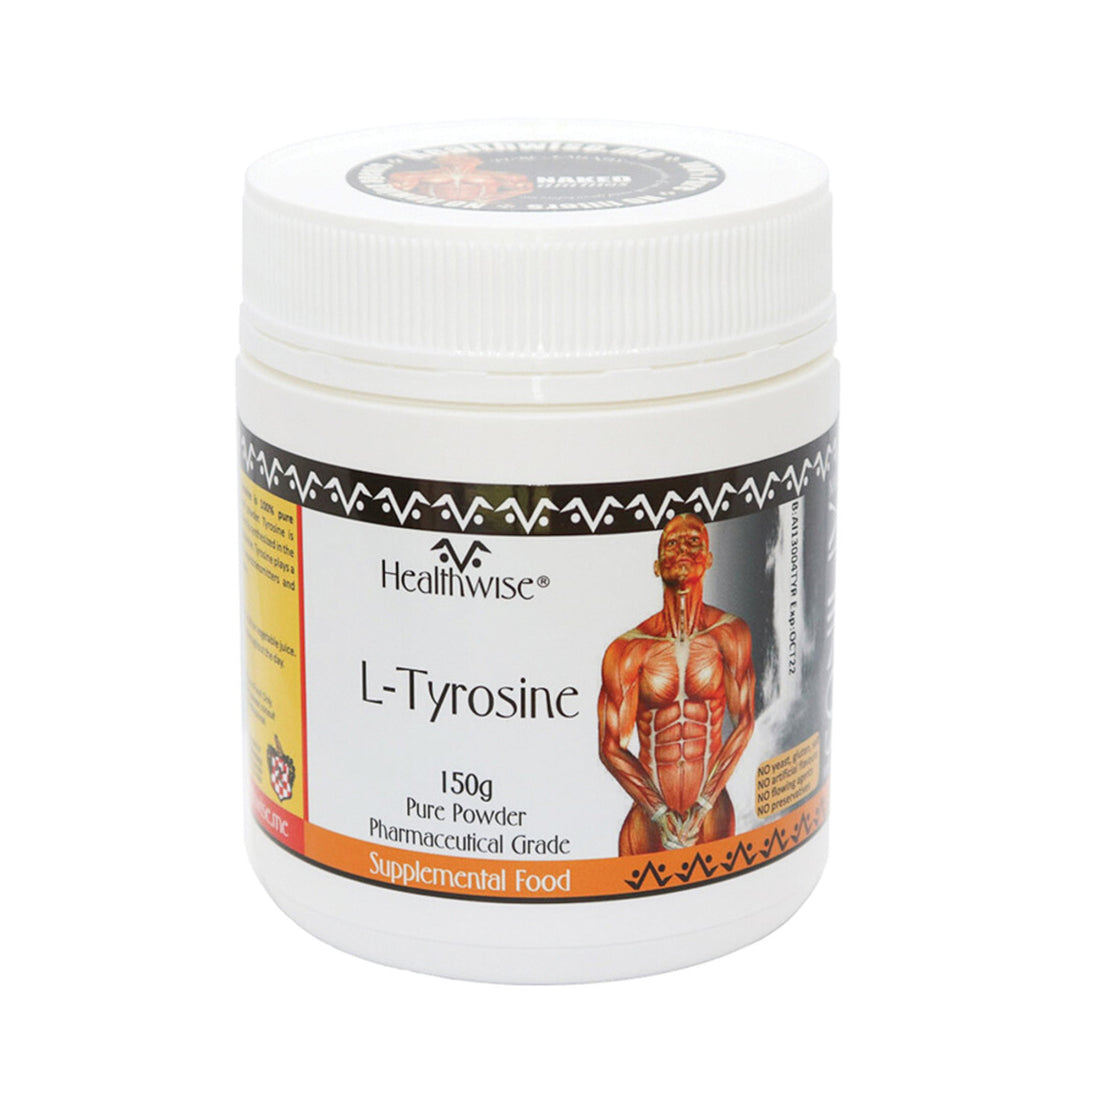 HealthWise® L-Tyrosine